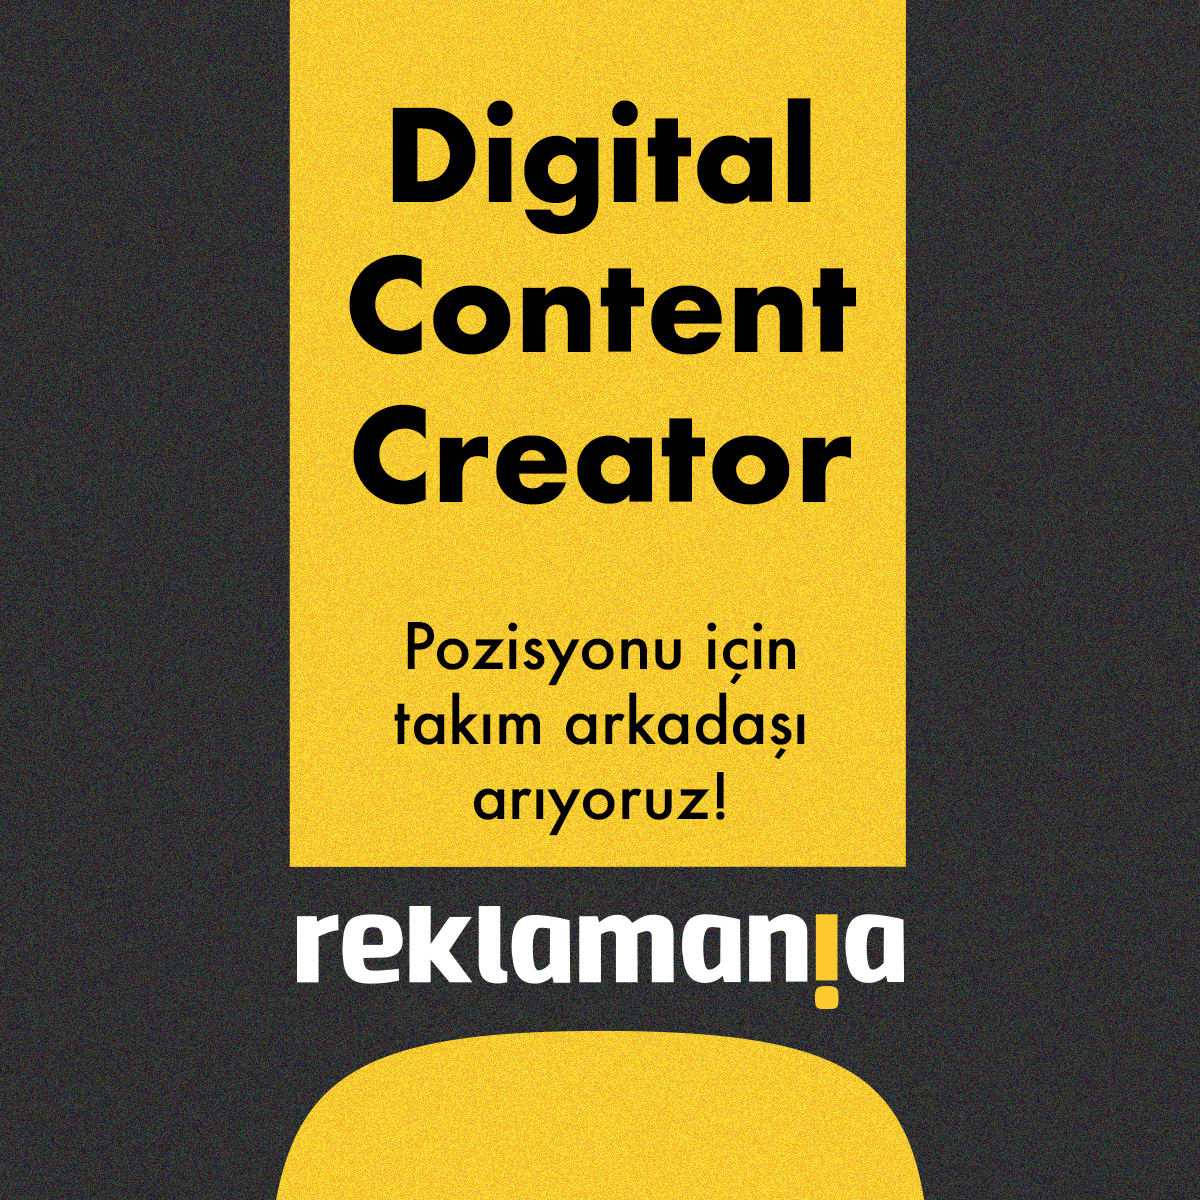 Reklamania Digital Content Creator arıyor!